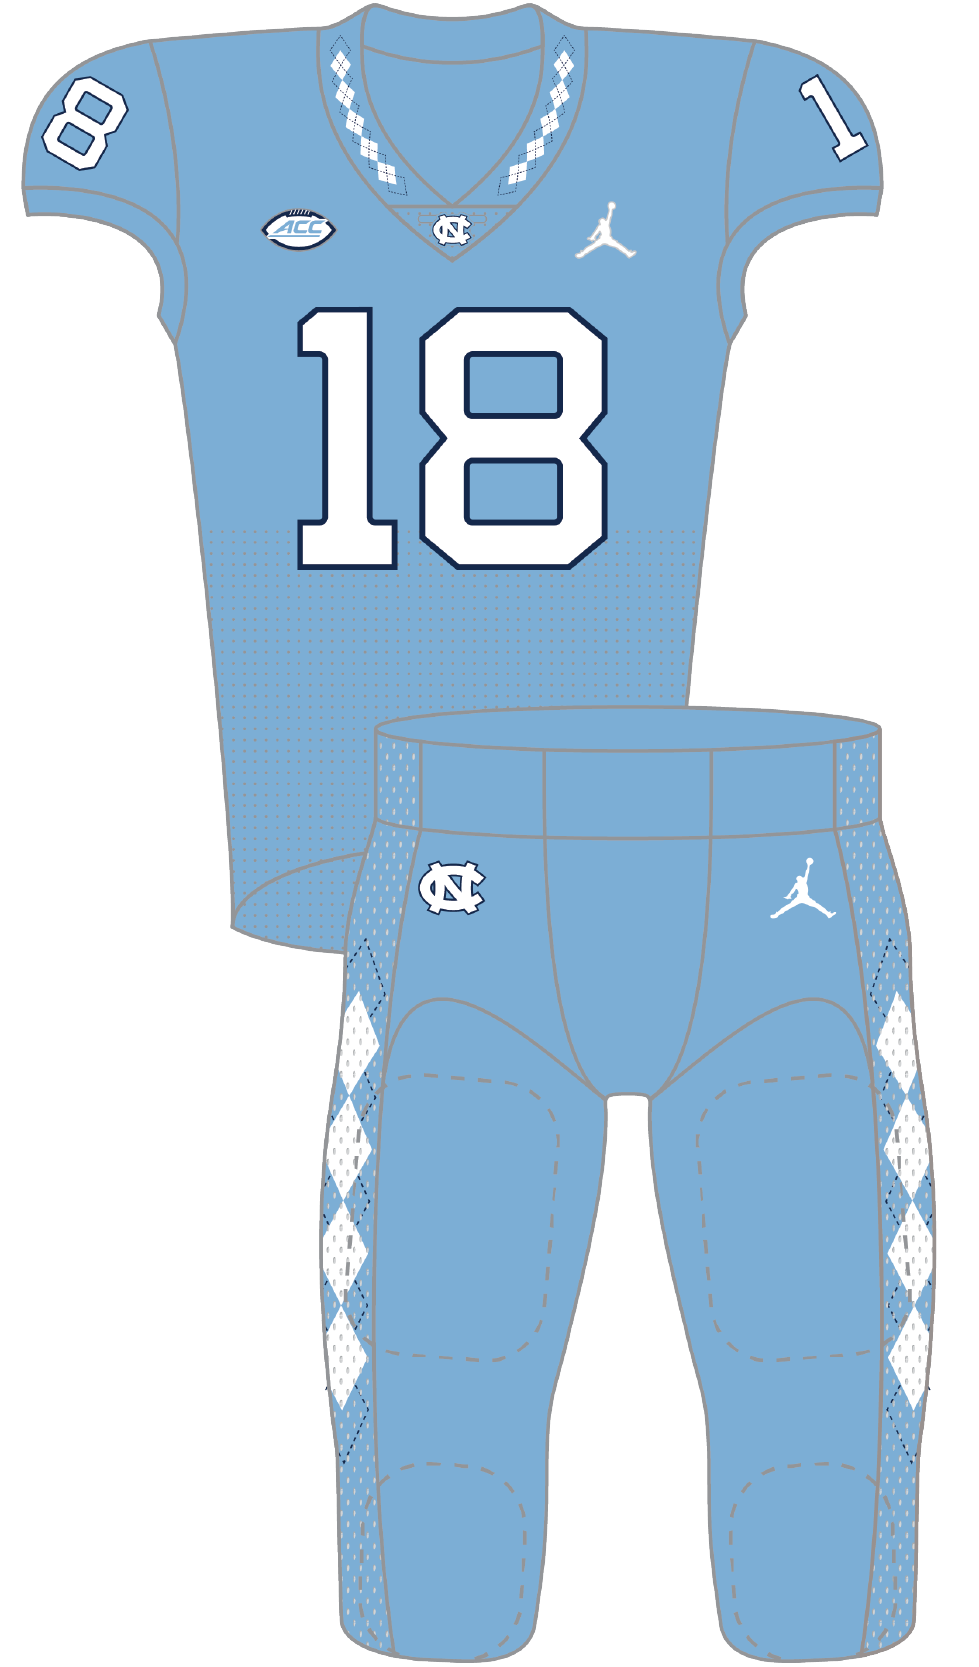 North Carolina 2018 Blue Uniform